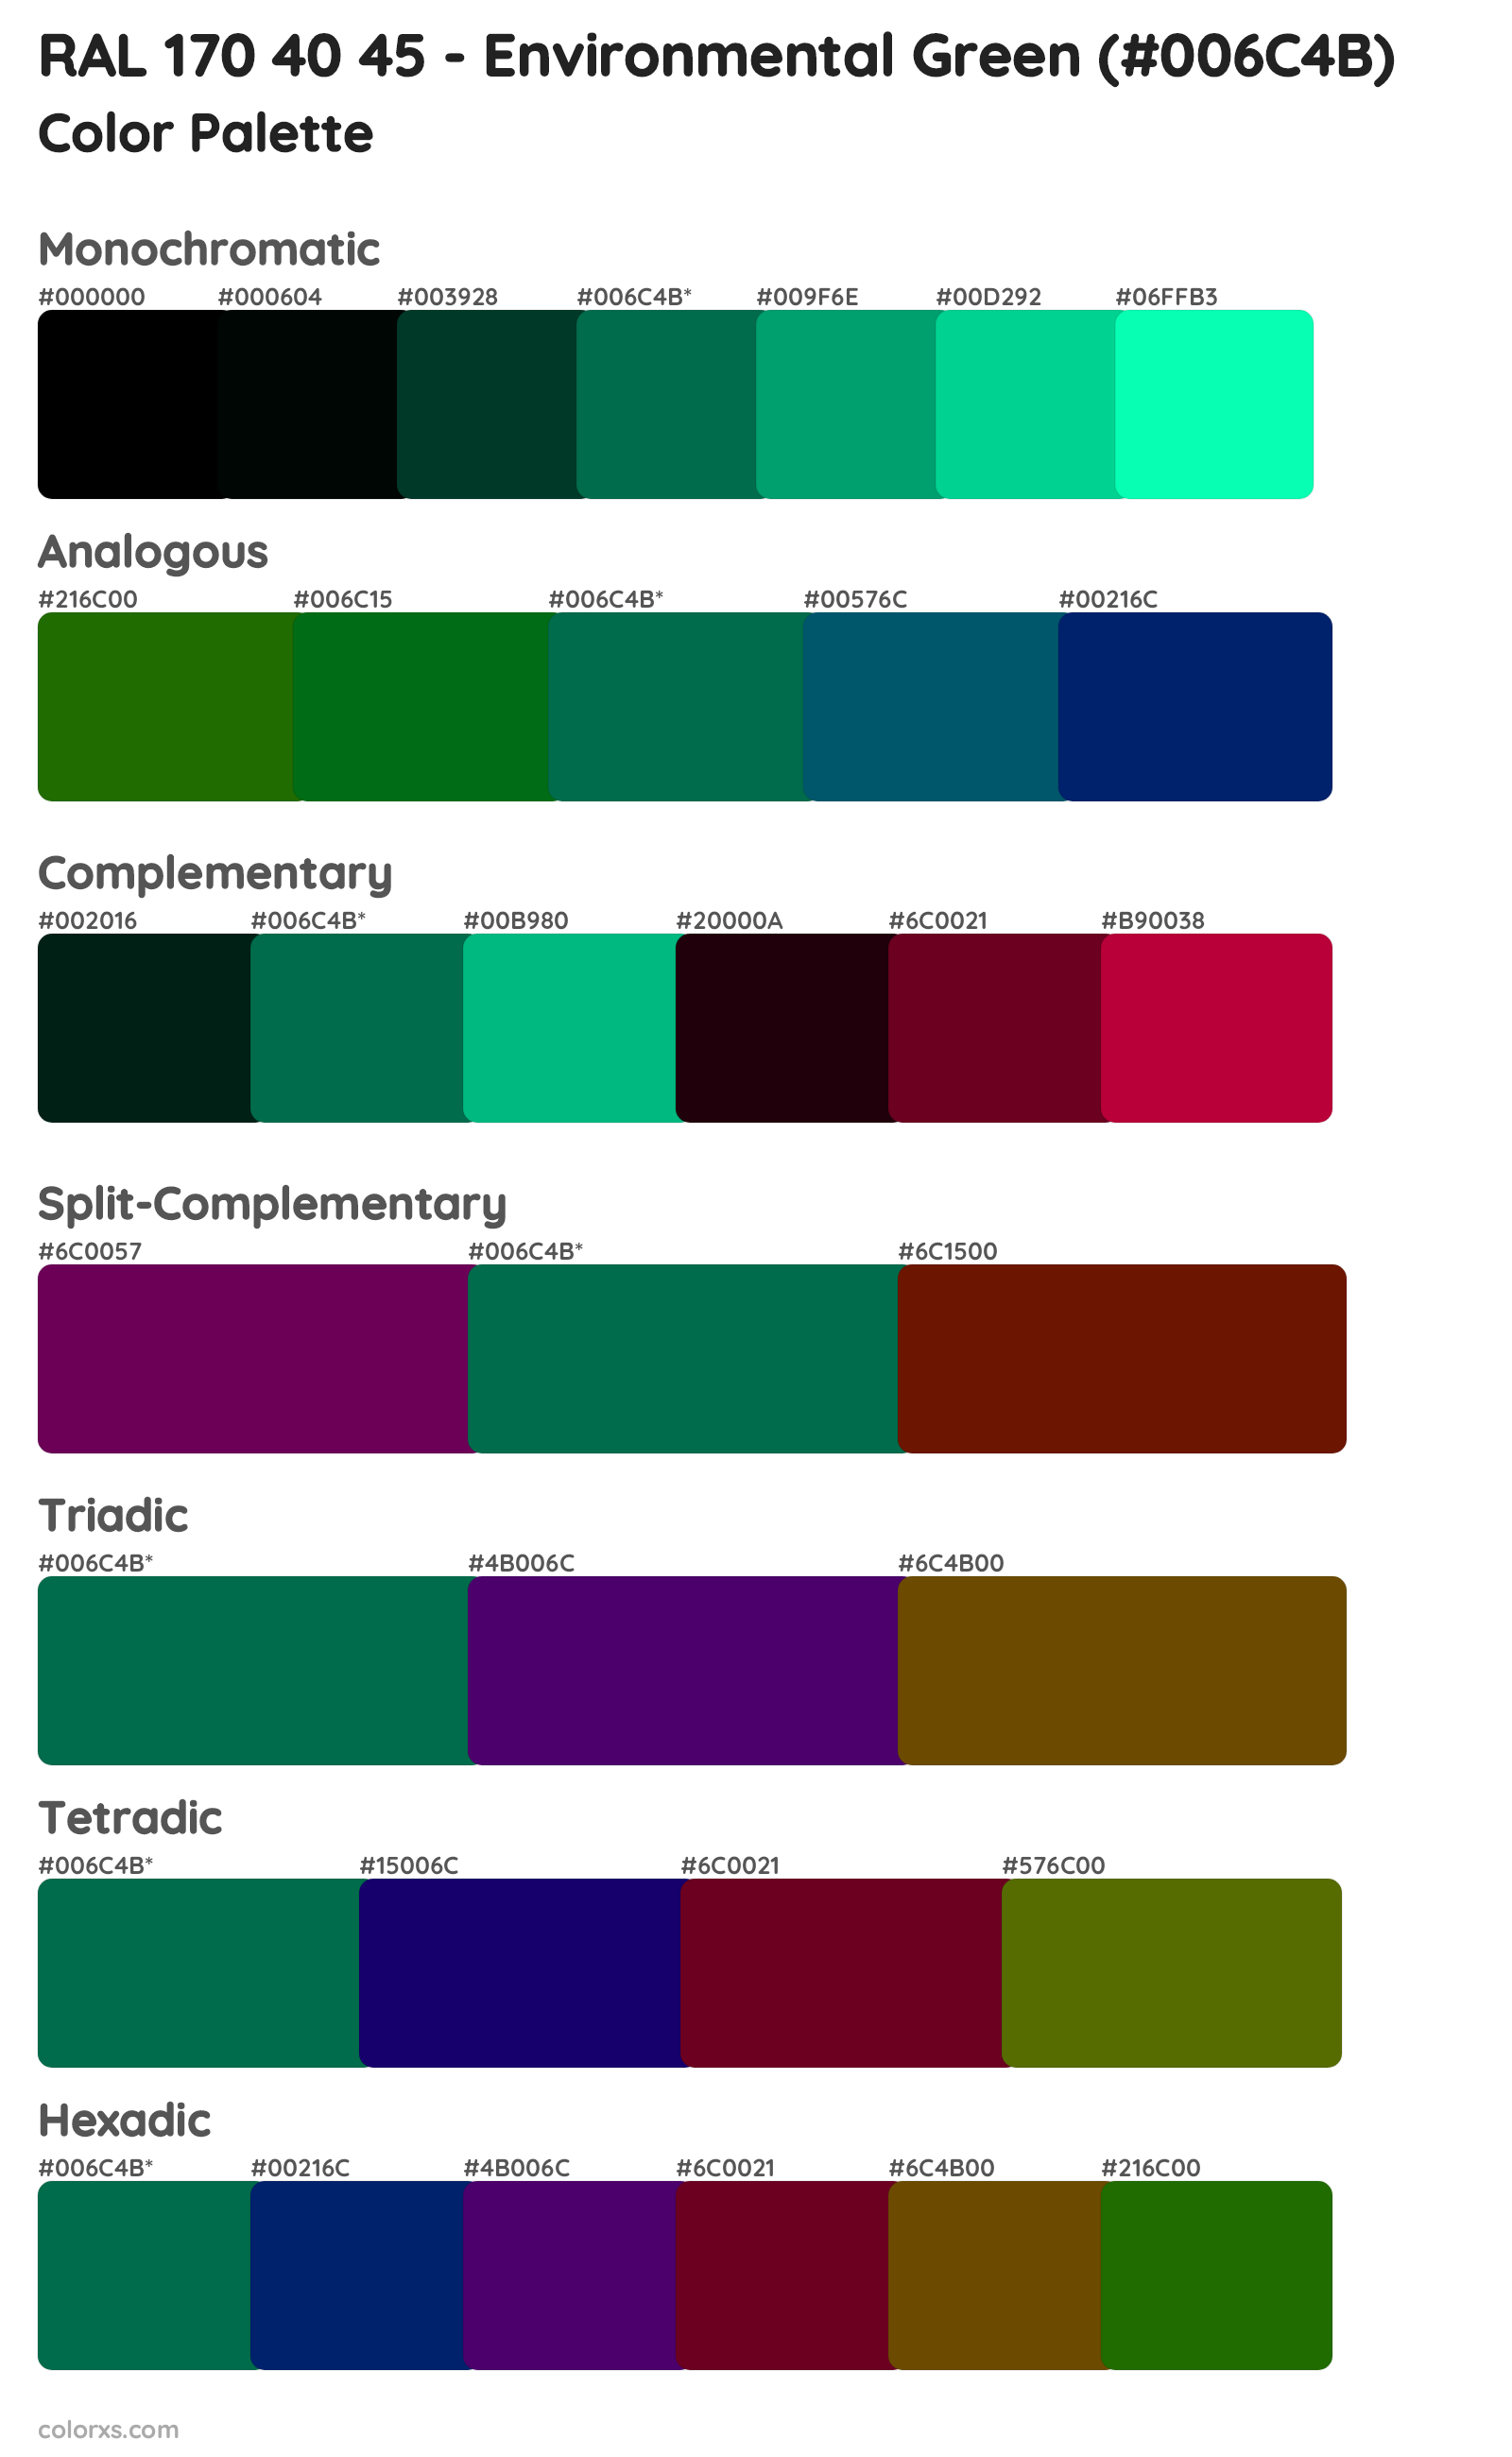 RAL 170 40 45 - Environmental Green Color Scheme Palettes